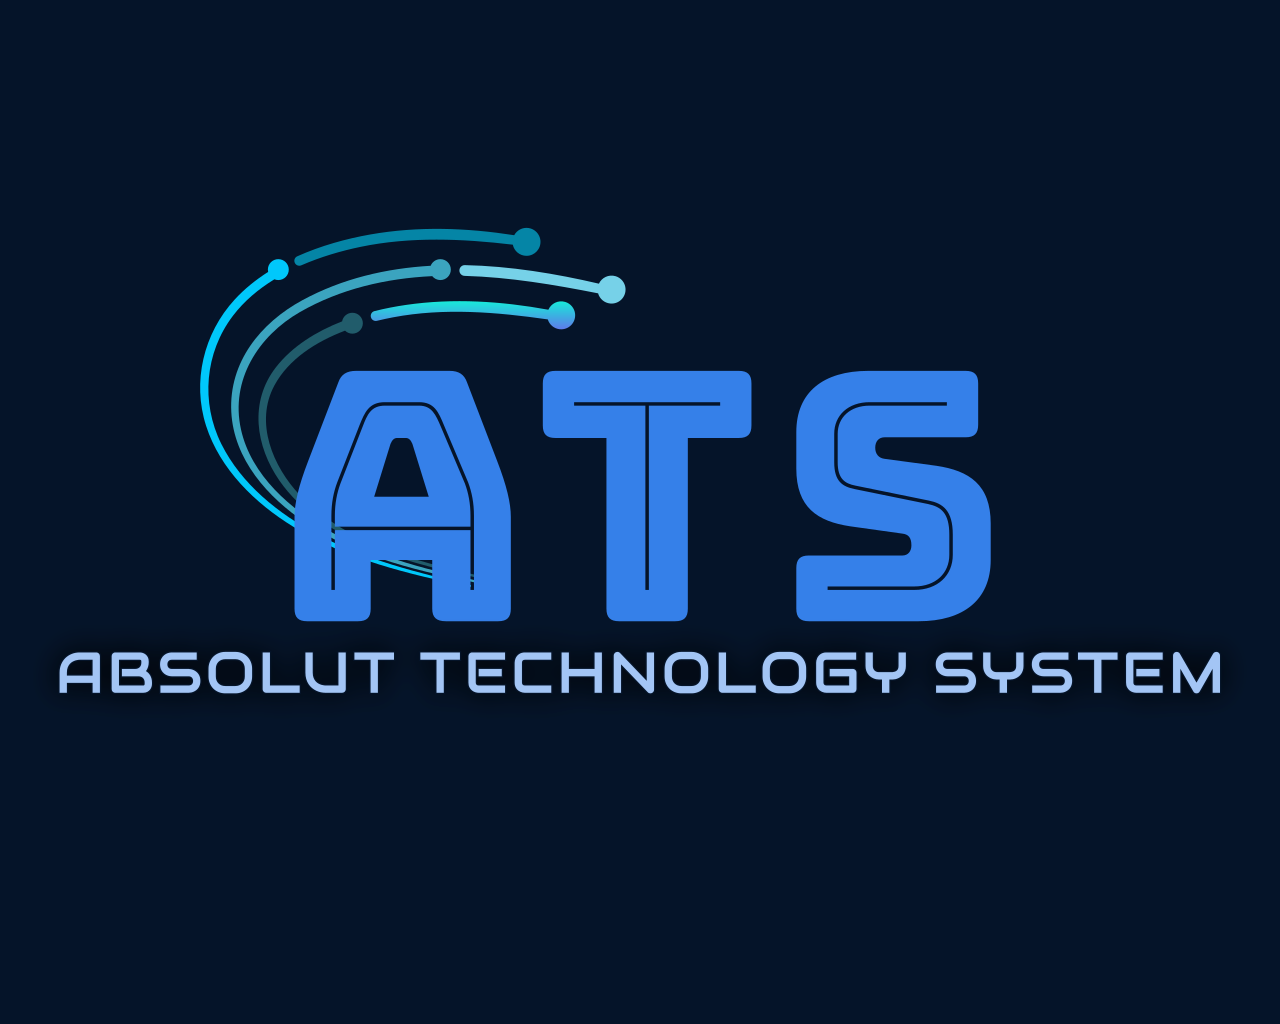 Absolut Technology System's logo